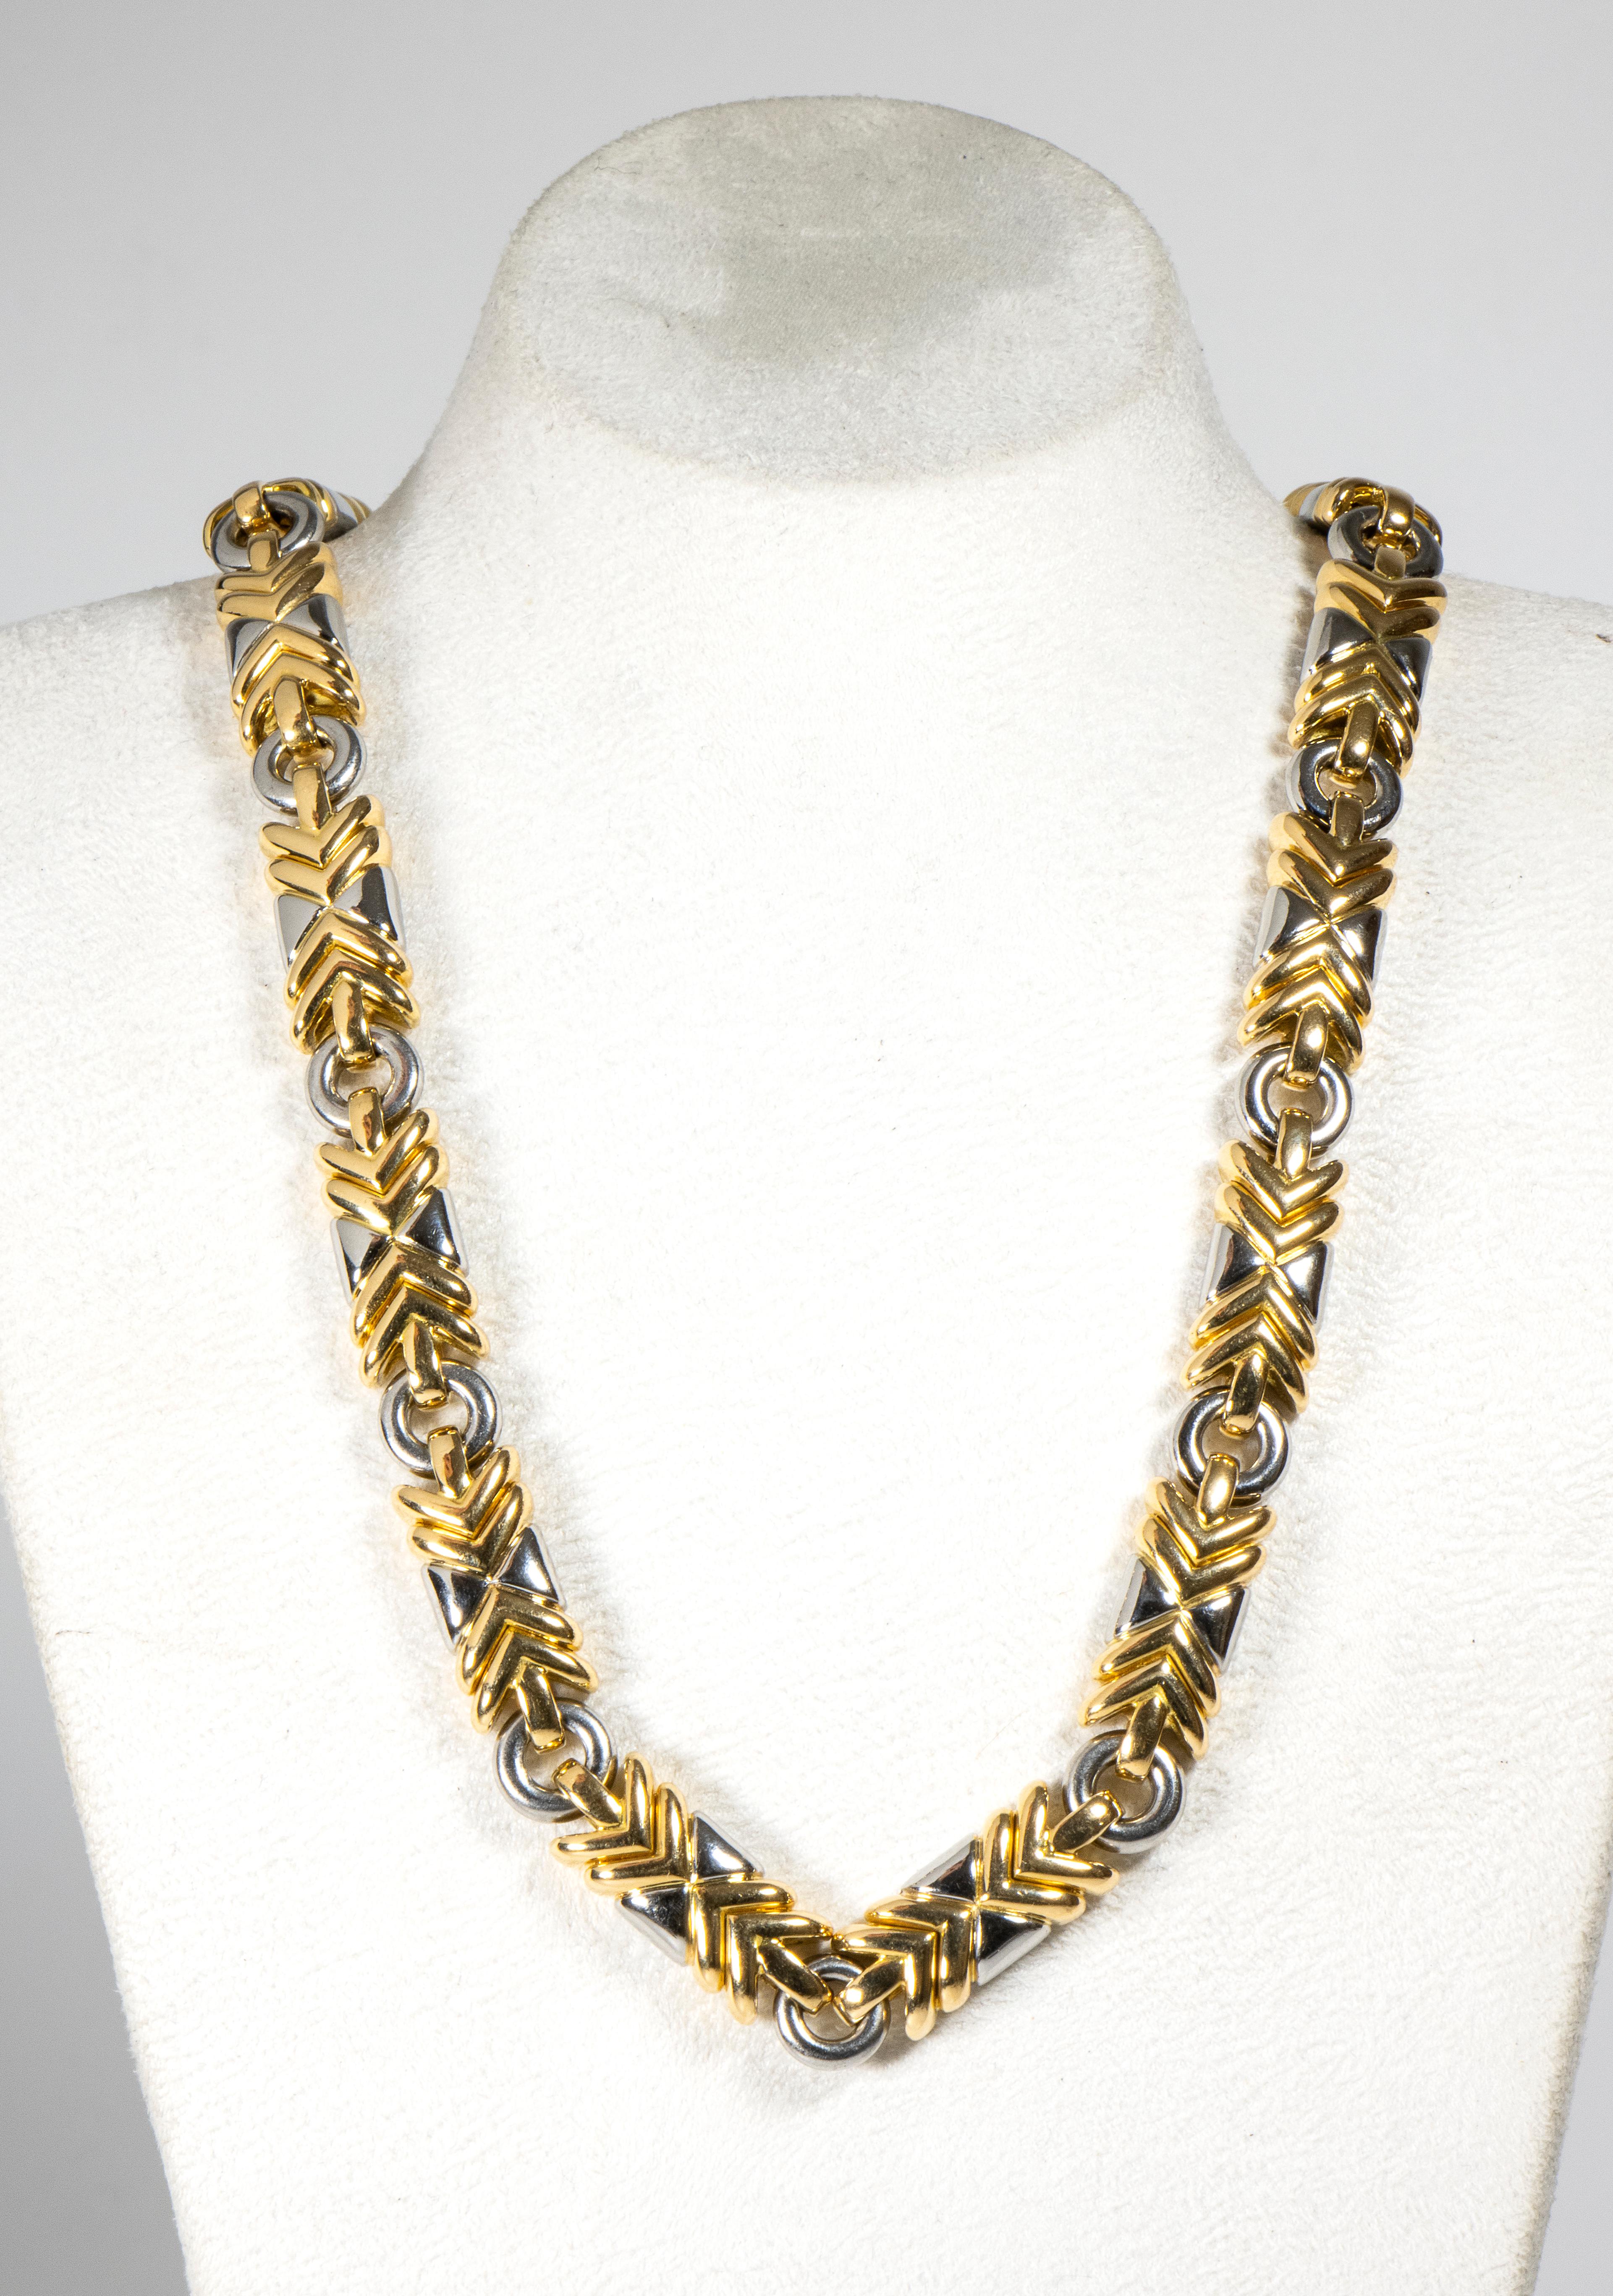 Women's Bulgari Parentesi Necklace 18 Karat Gold and Stainless Steel